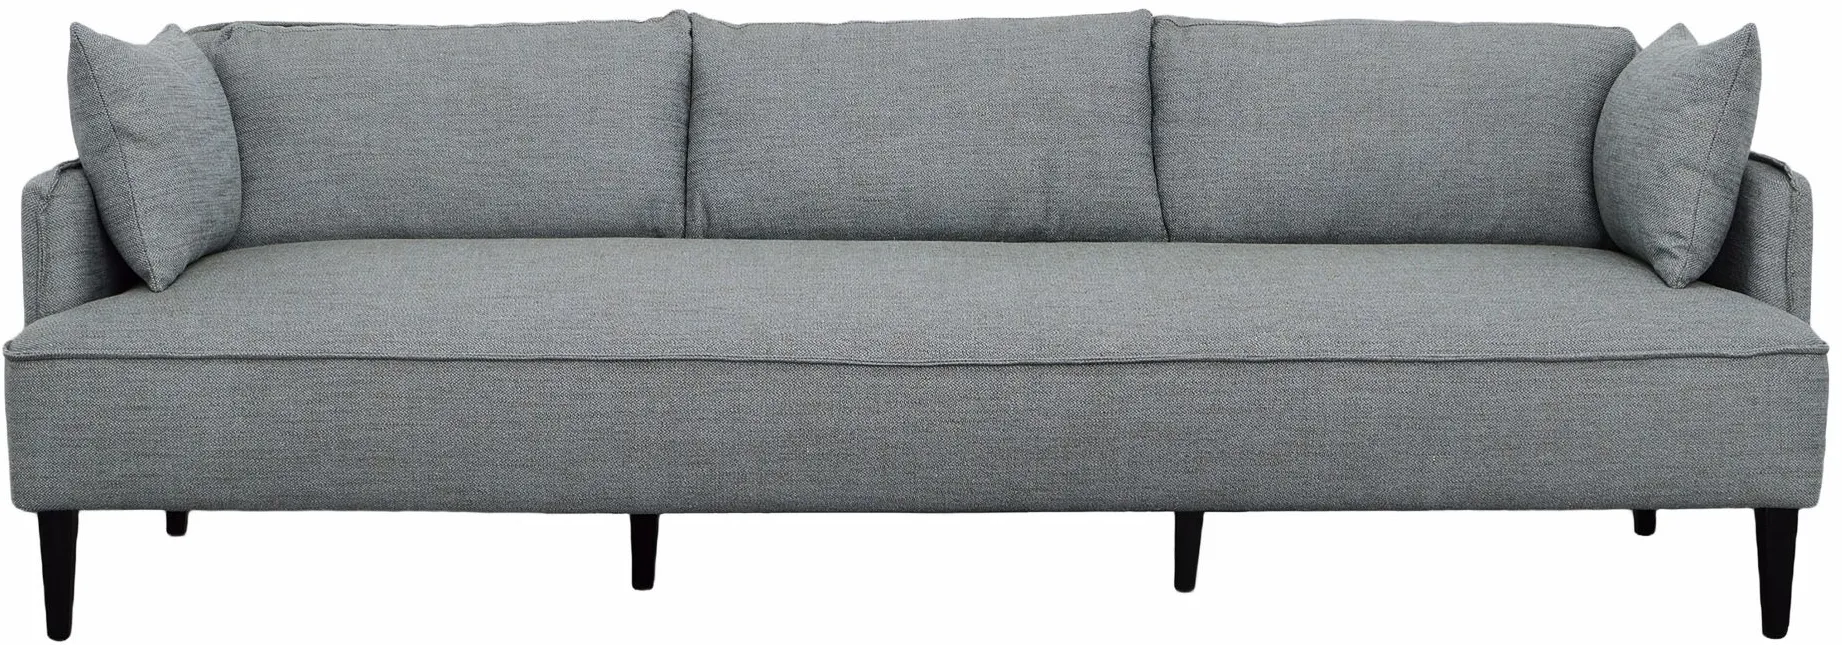 Paris Bench Sofa in Gray by Bellanest